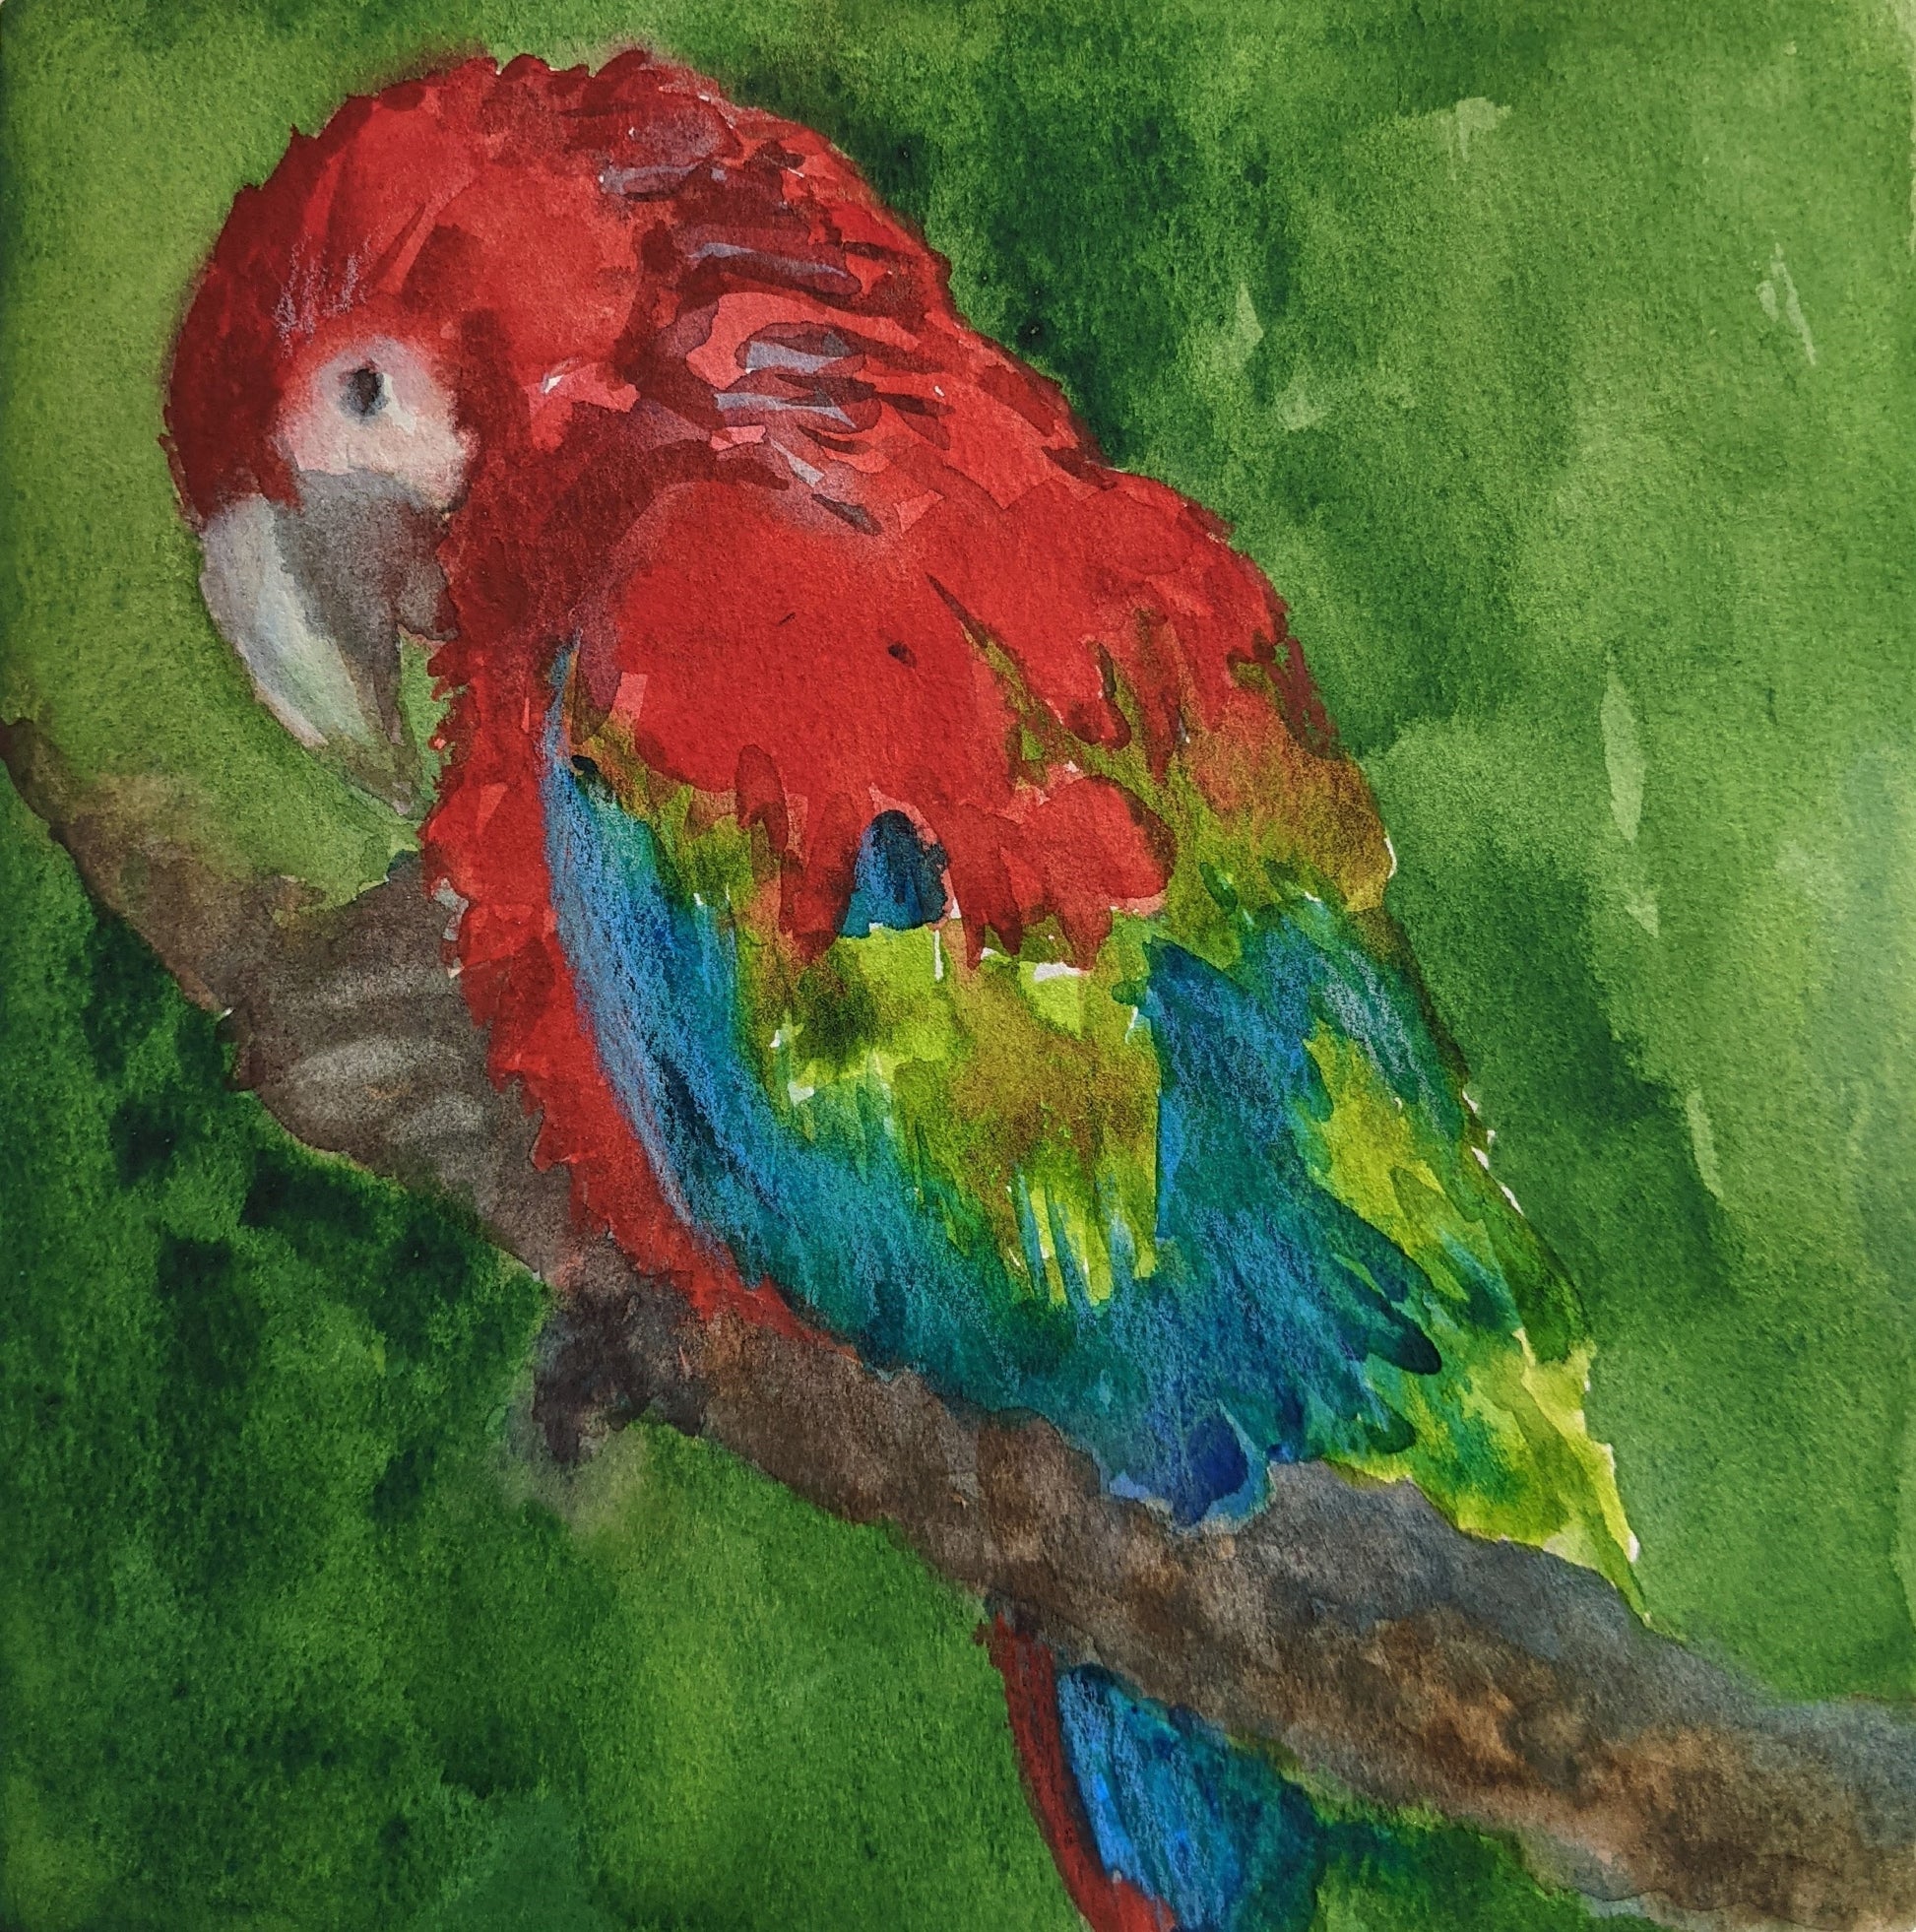 Parrot Splash watercolor painting on paper